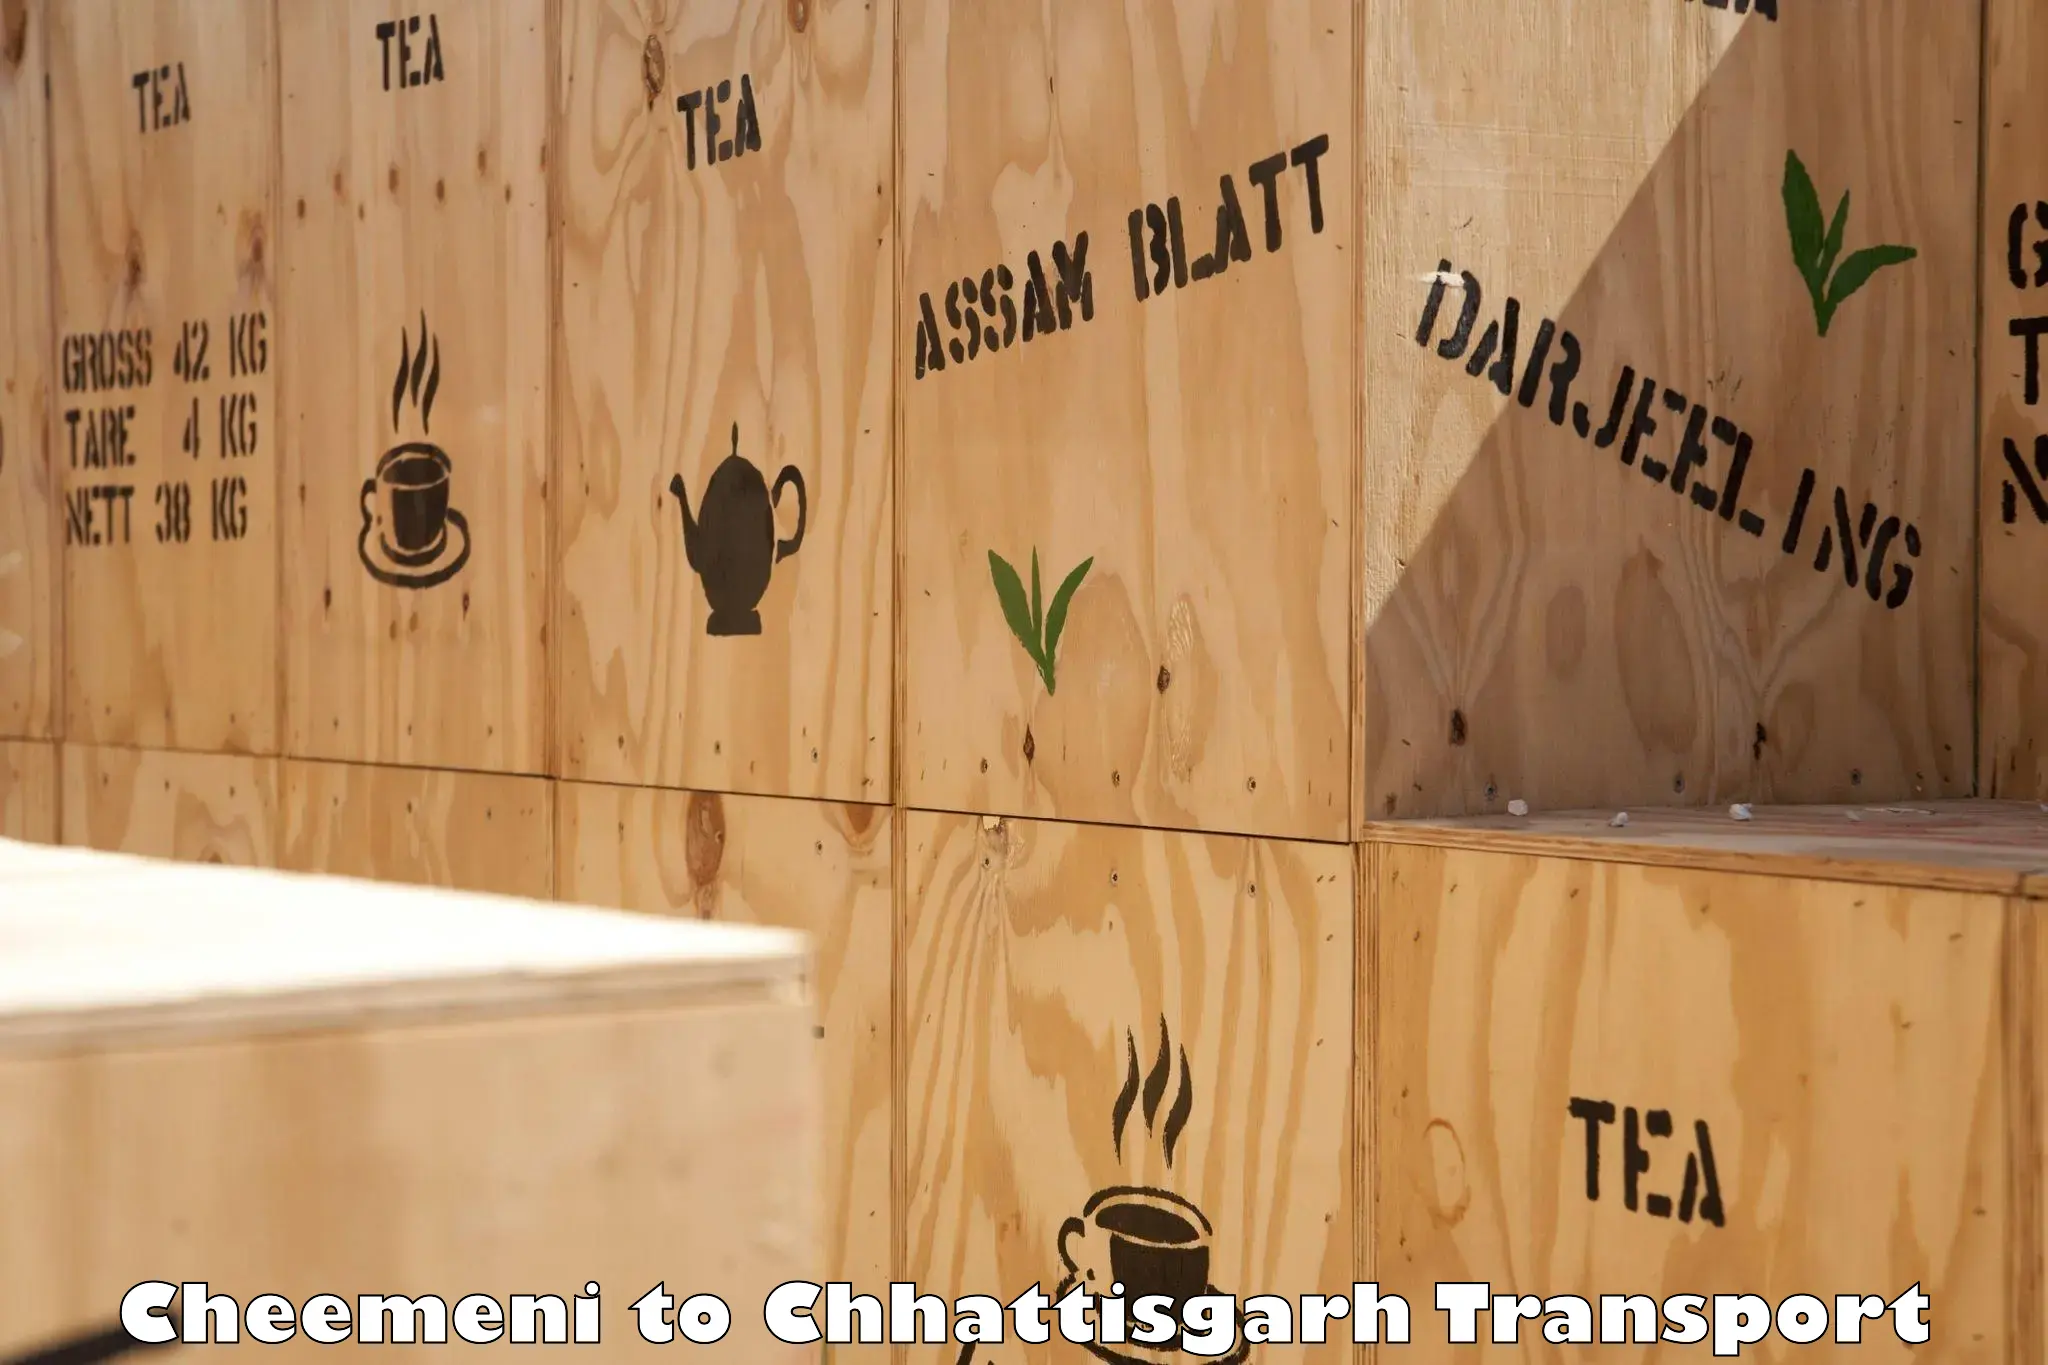 Truck transport companies in India Cheemeni to Patna Chhattisgarh